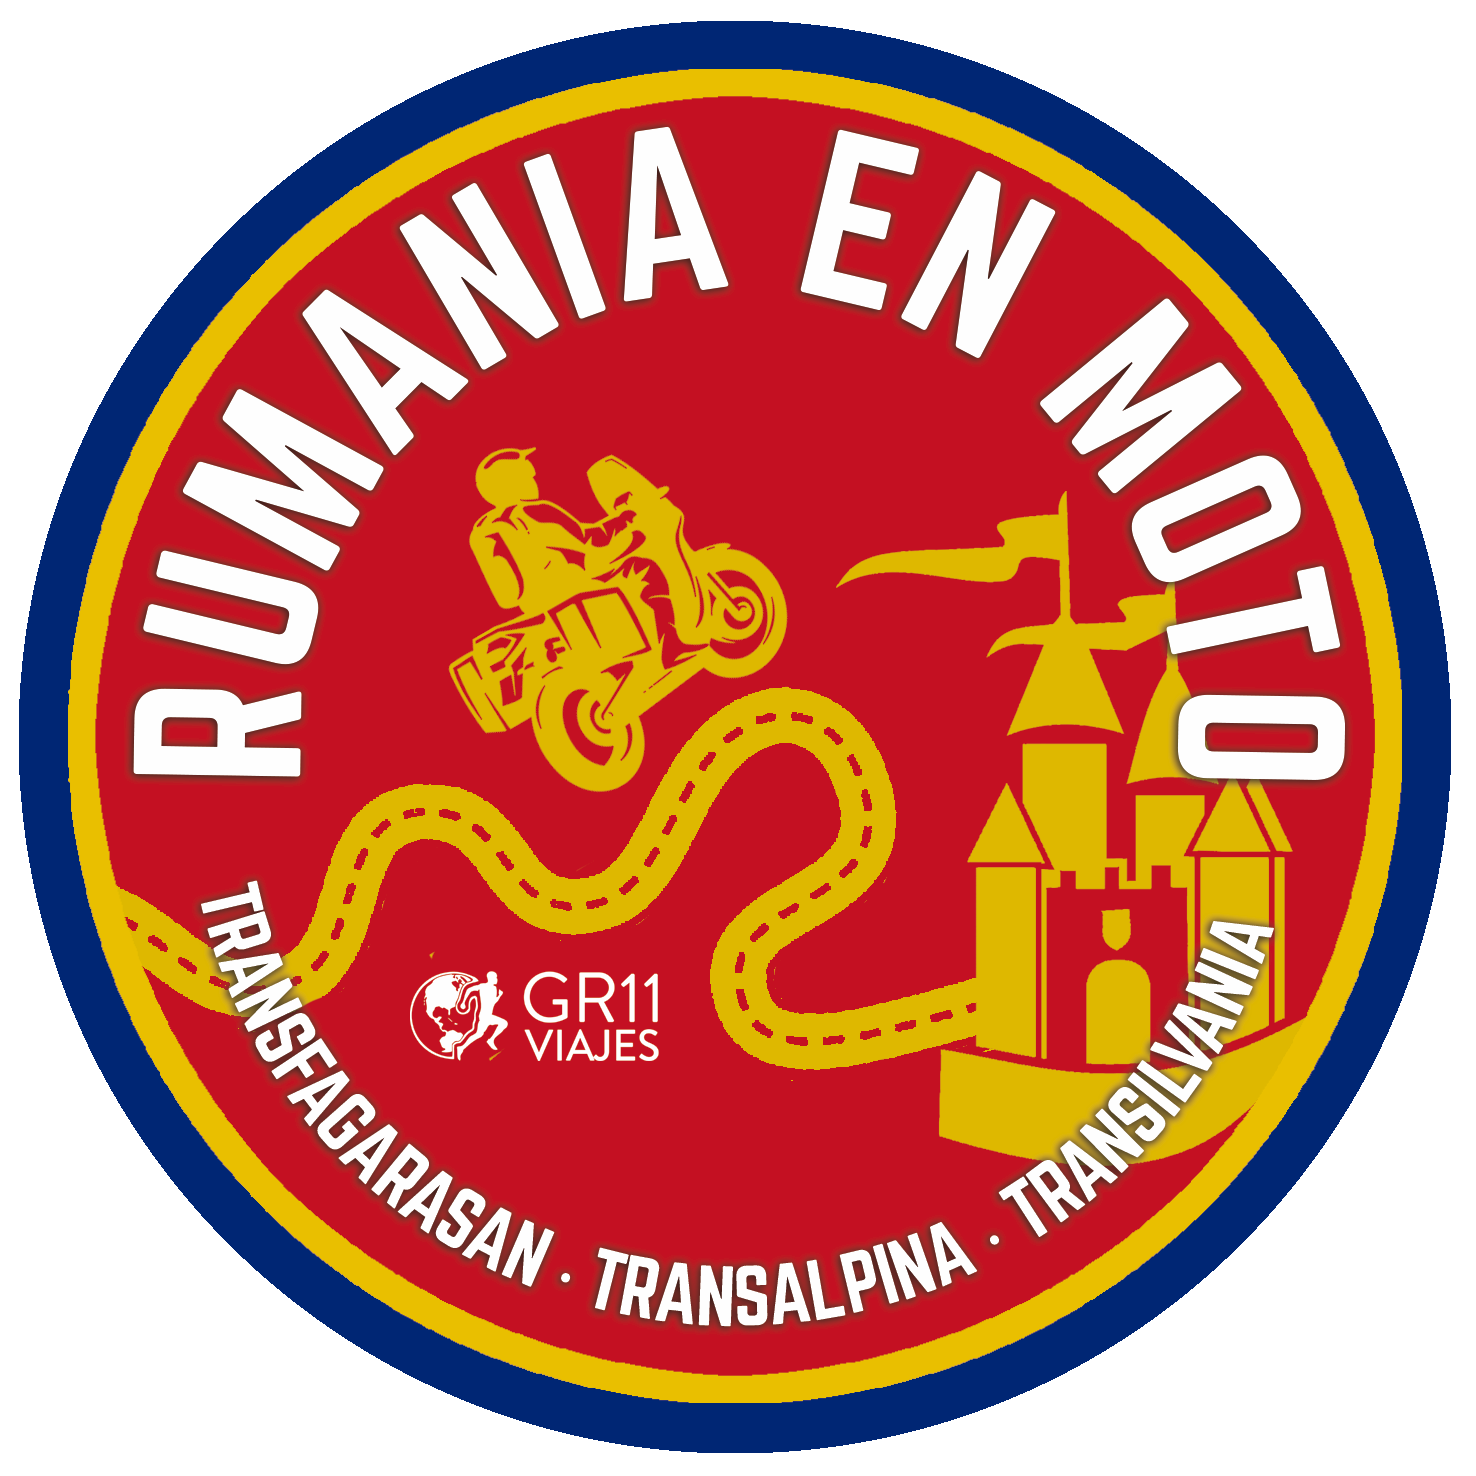 Rumania en moto